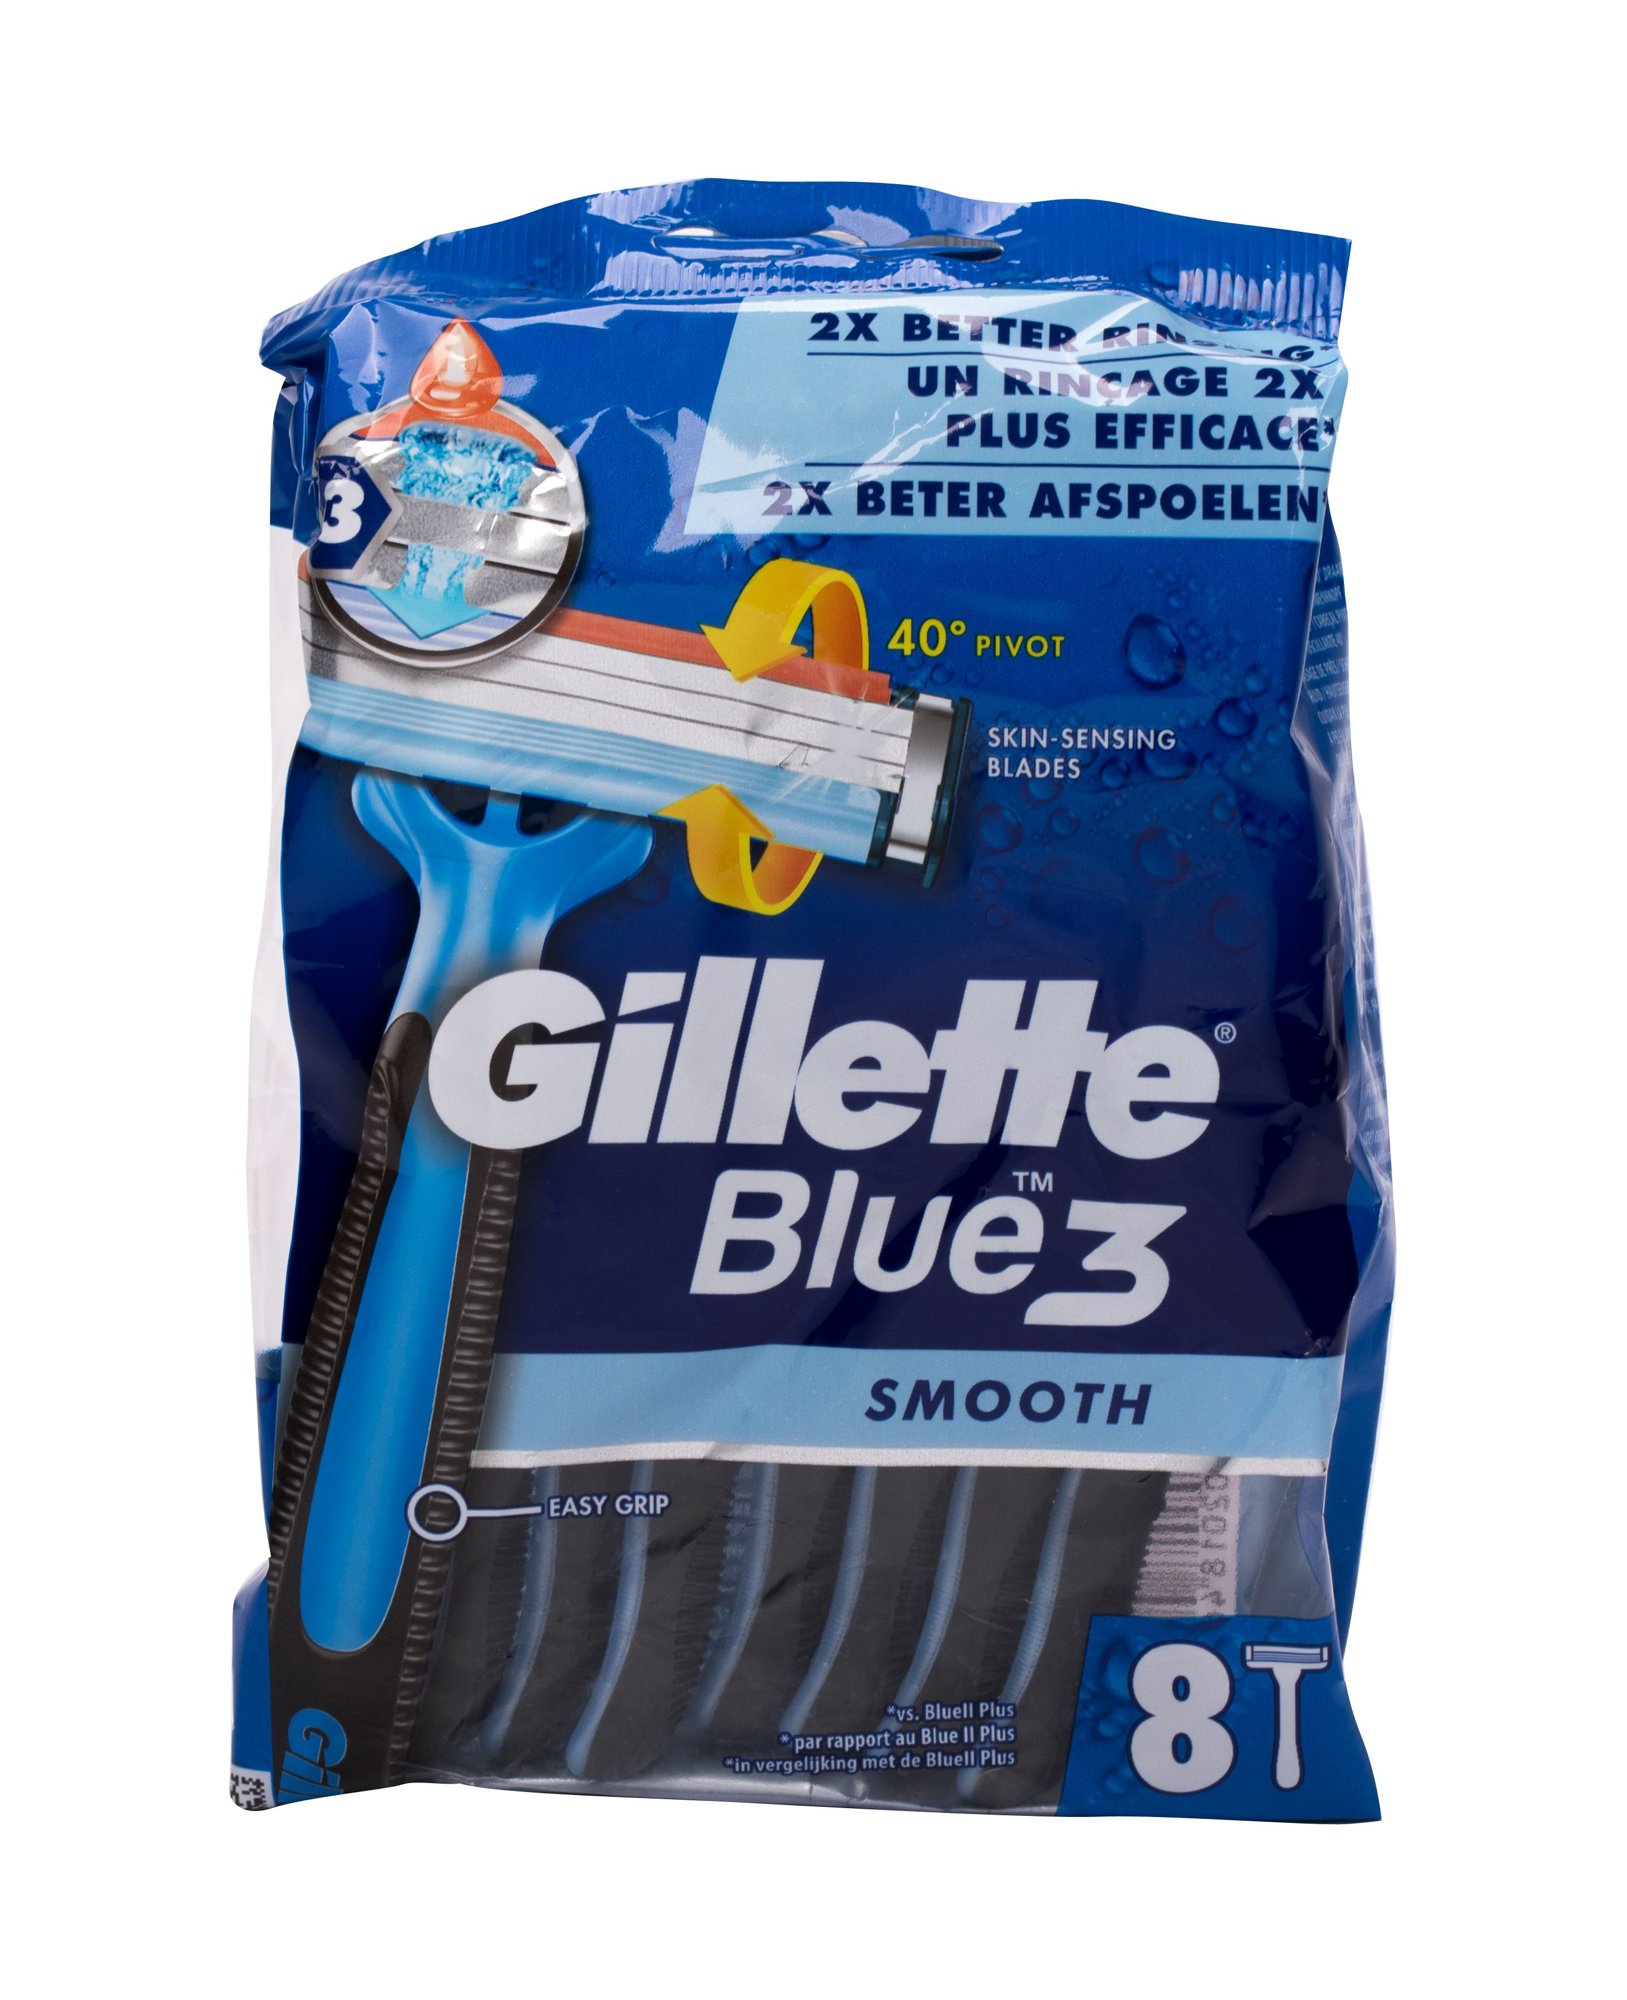 Gillette Blue3 Smooth 8vnt skustuvas